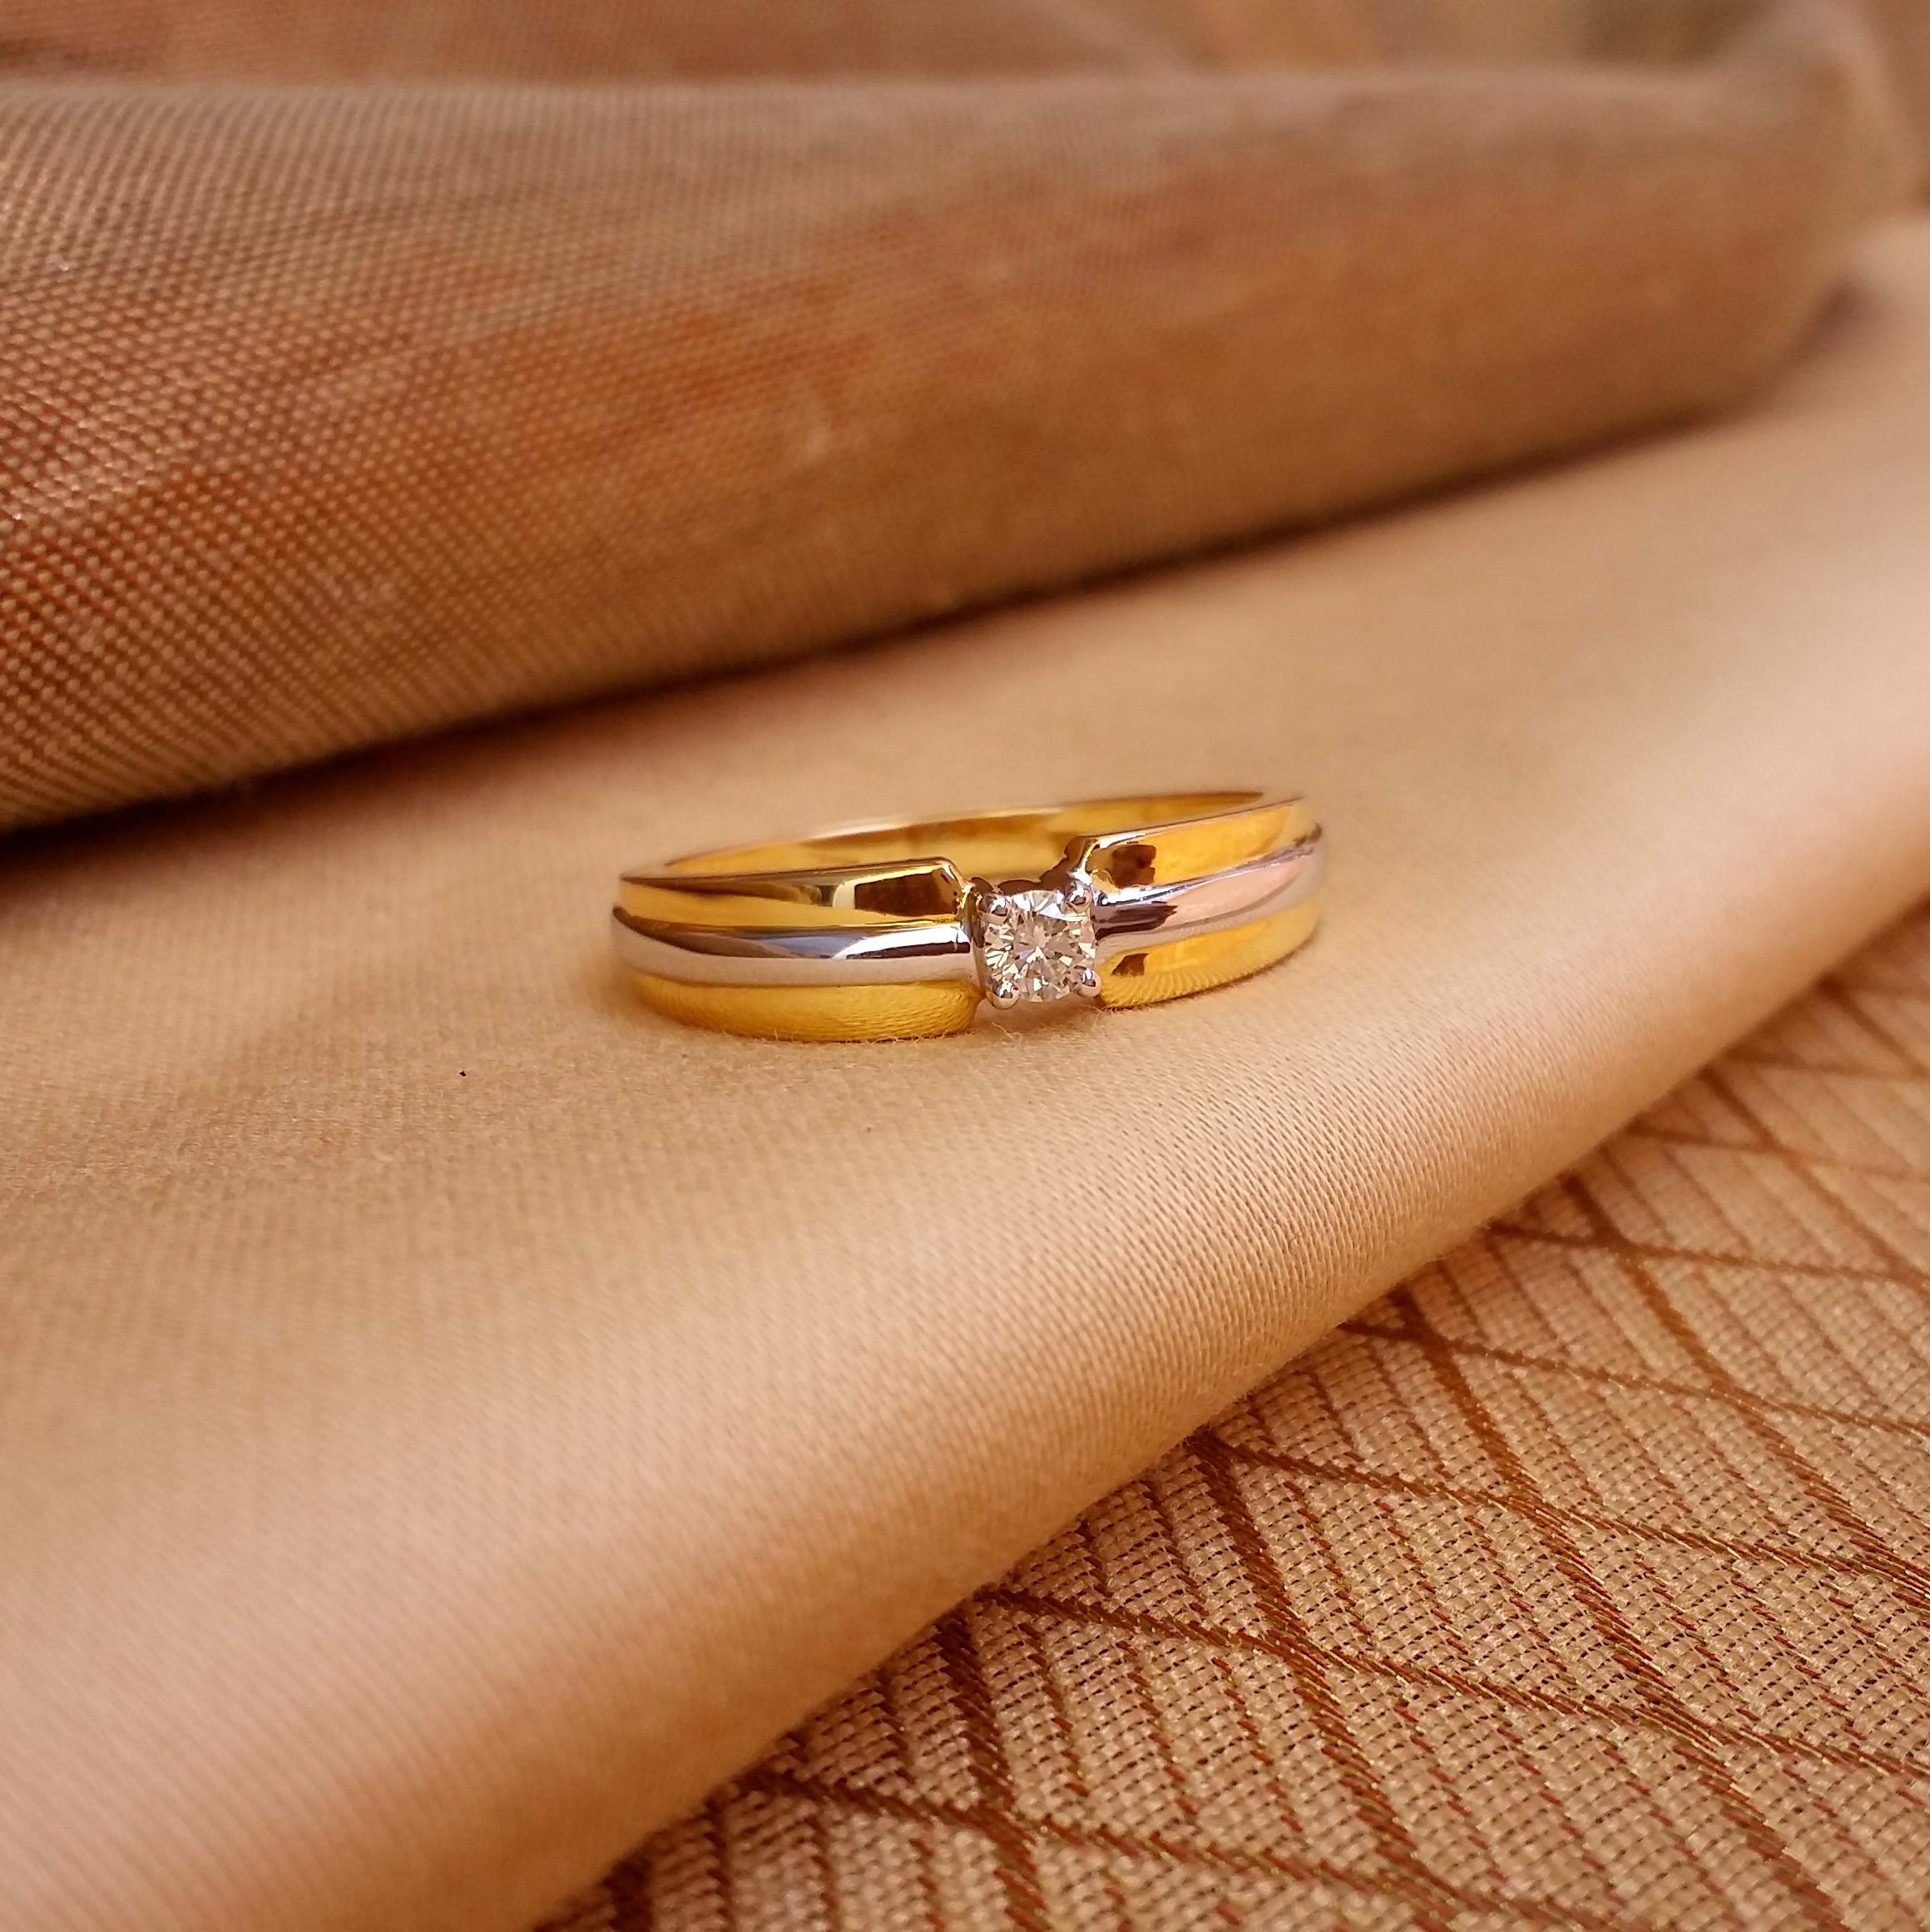 Minimalist Ring, Diamond Ring, 14k Gold Ring, Diamond Wedding Ring, St –  Beauties Jewelry NYC